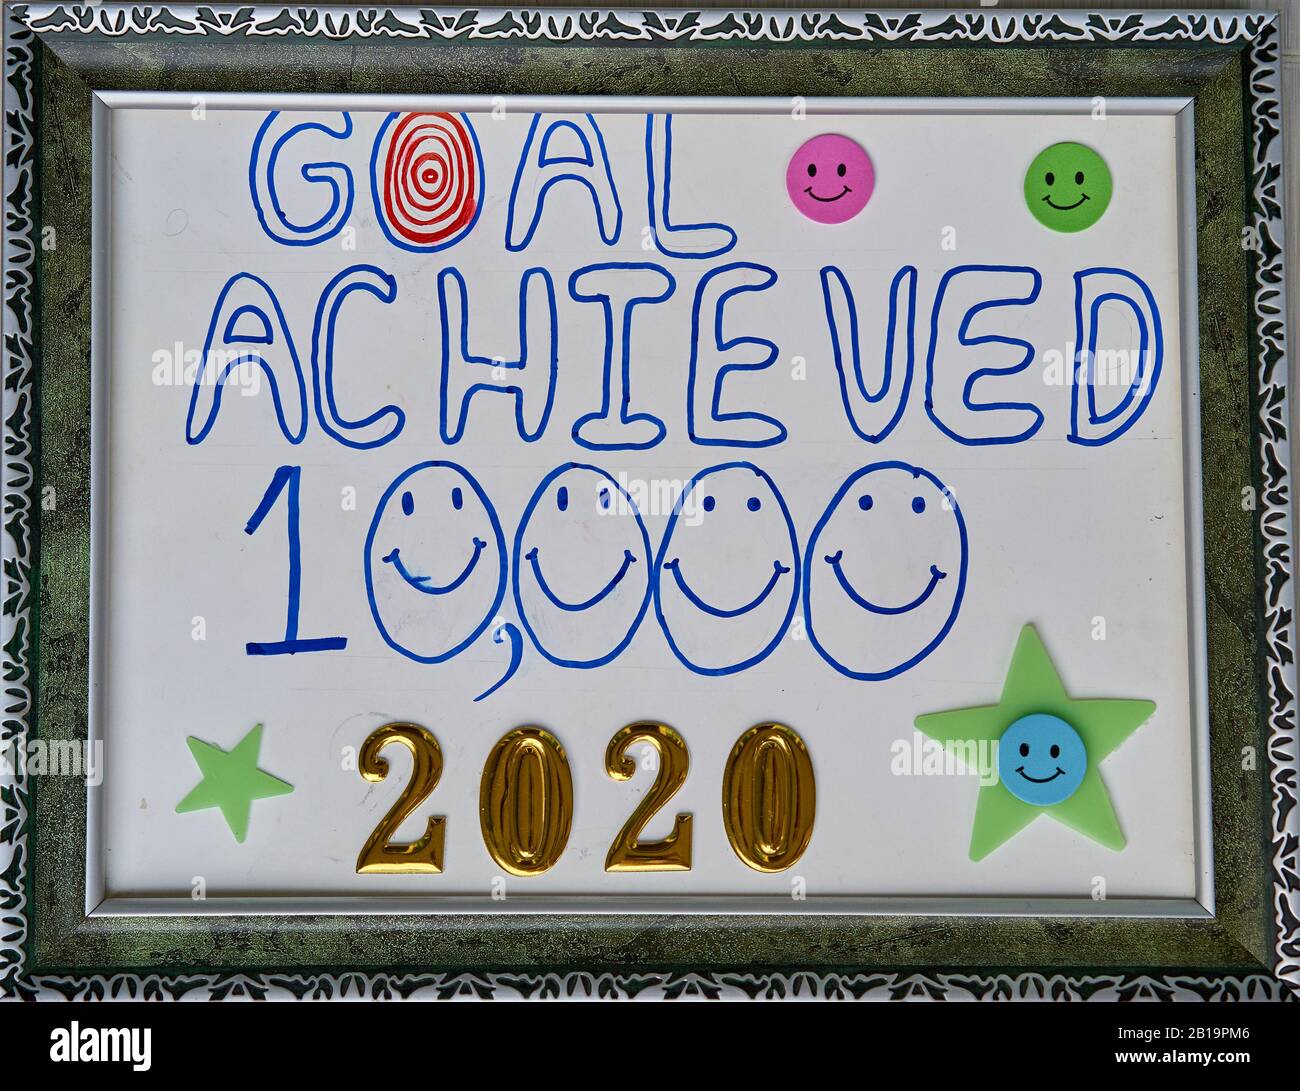 Goal achievement award certificate. Stock Photo